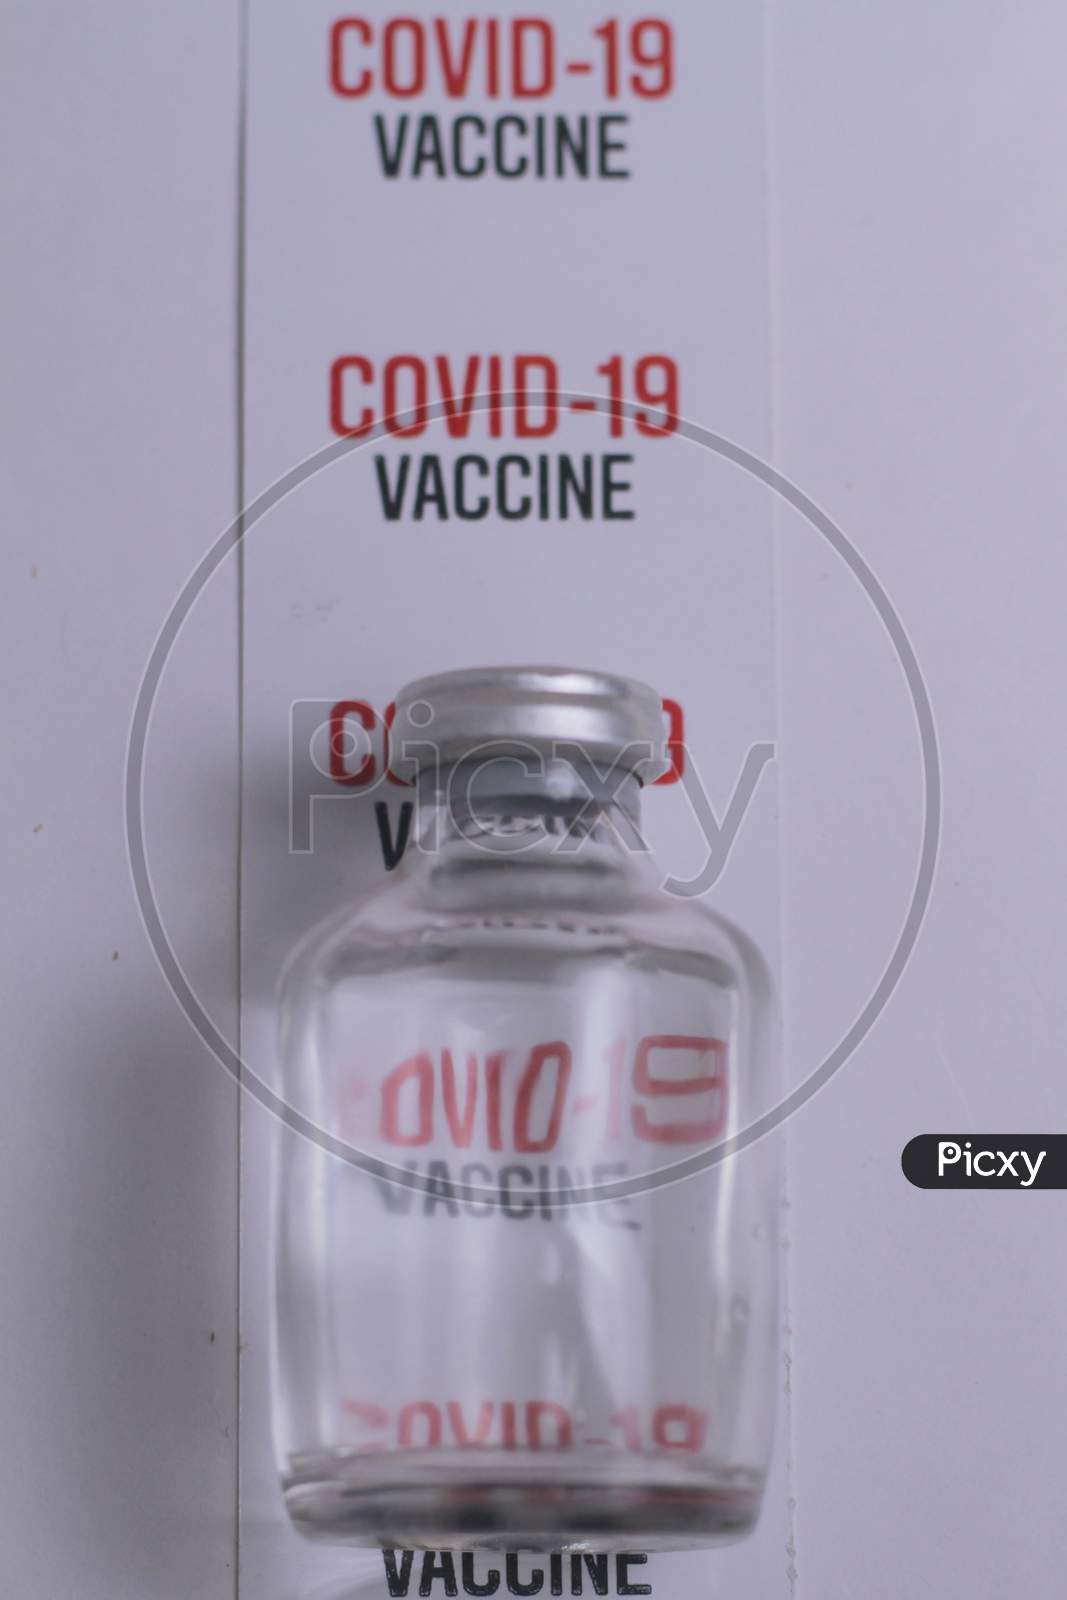 Development and creation of a coronavirus vaccine COVID-19 .Coronavirus Vaccine concept